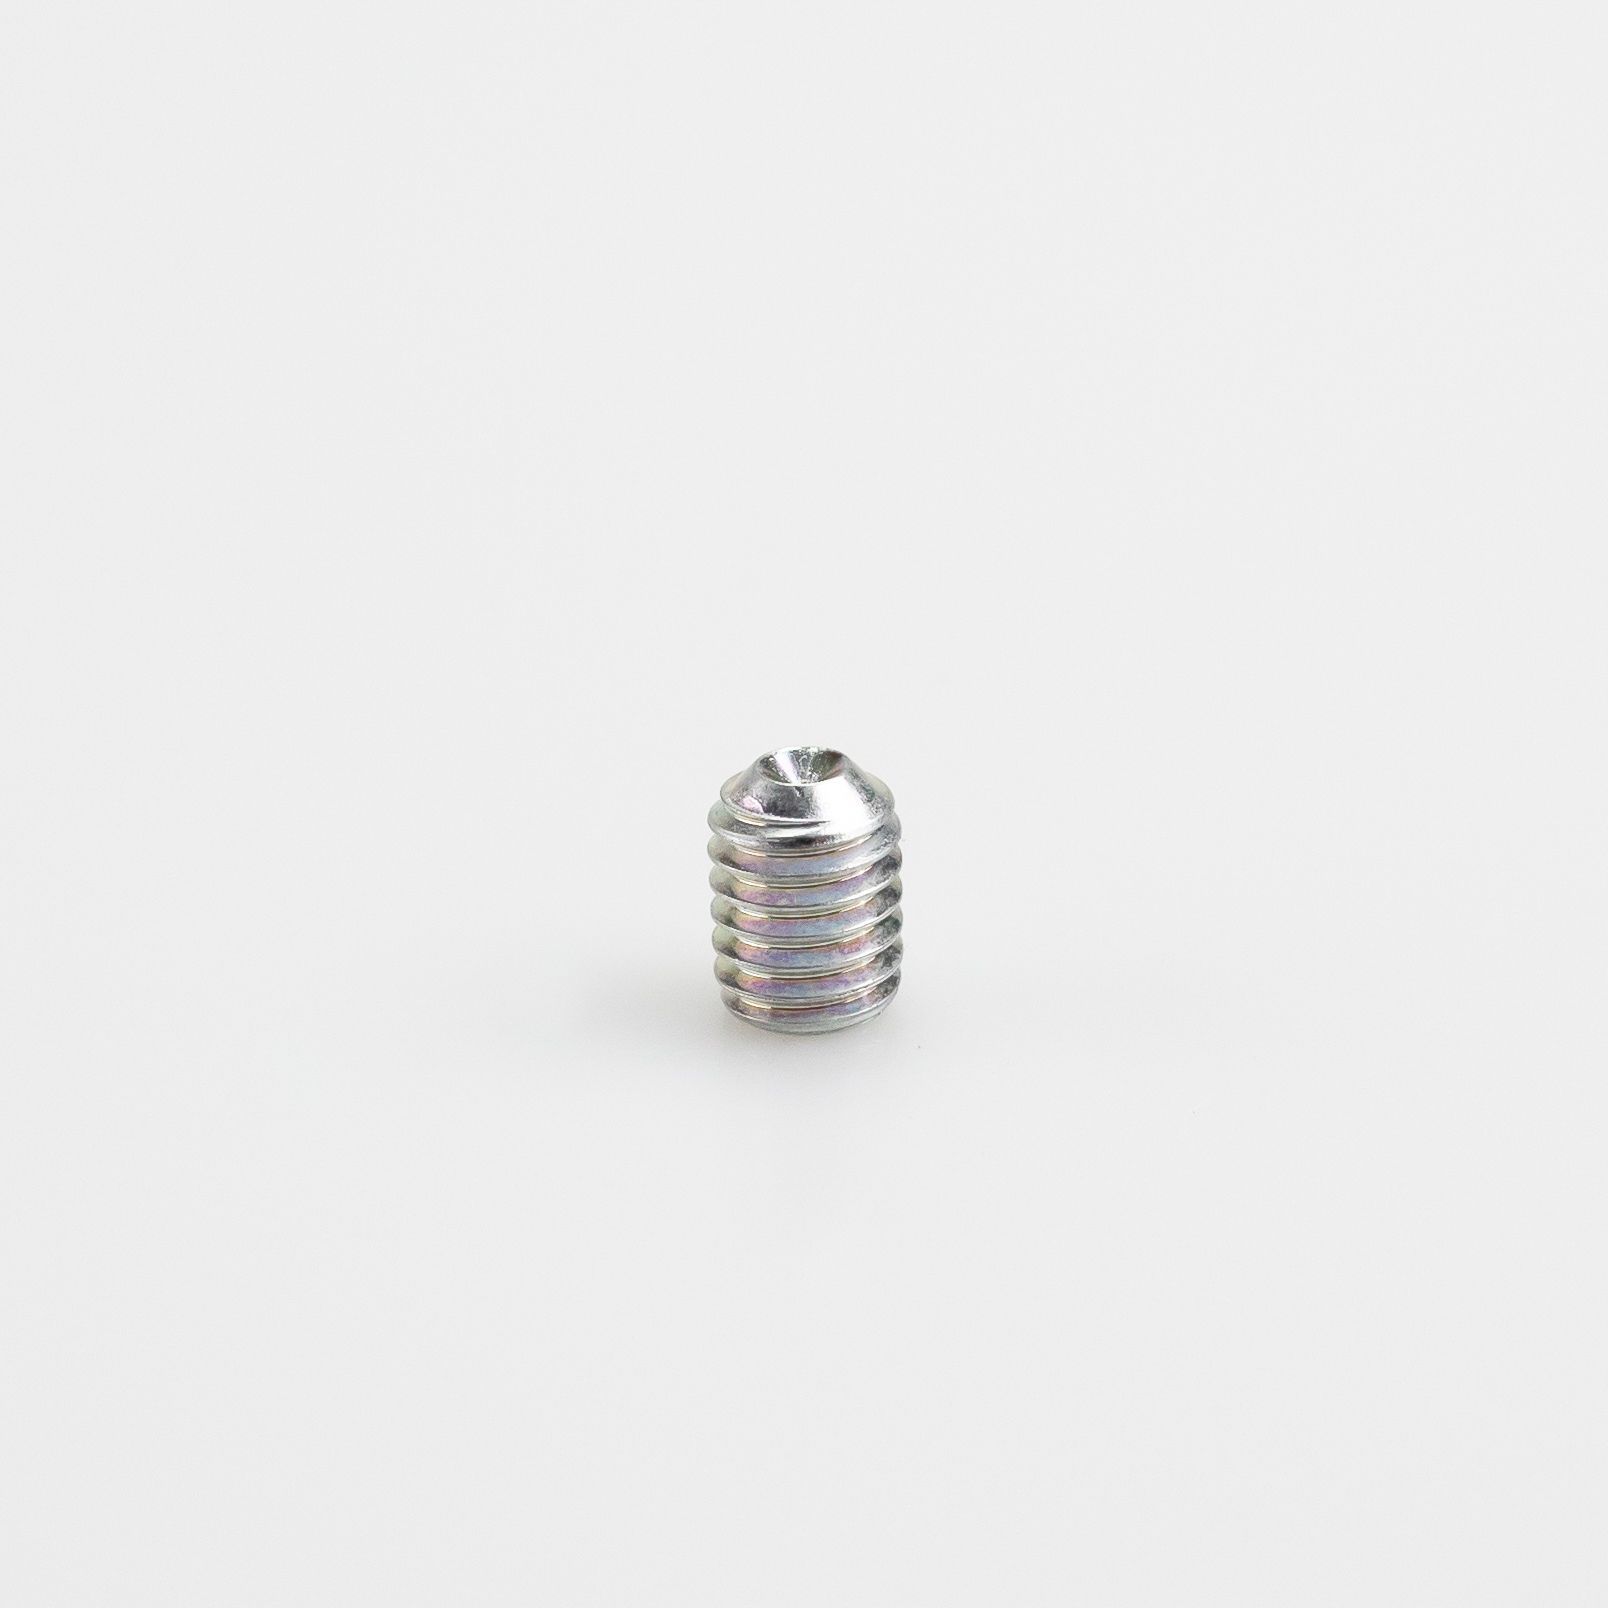 Obrázek produktu Securing screw innertube FF KYB 110790001401 M6x8